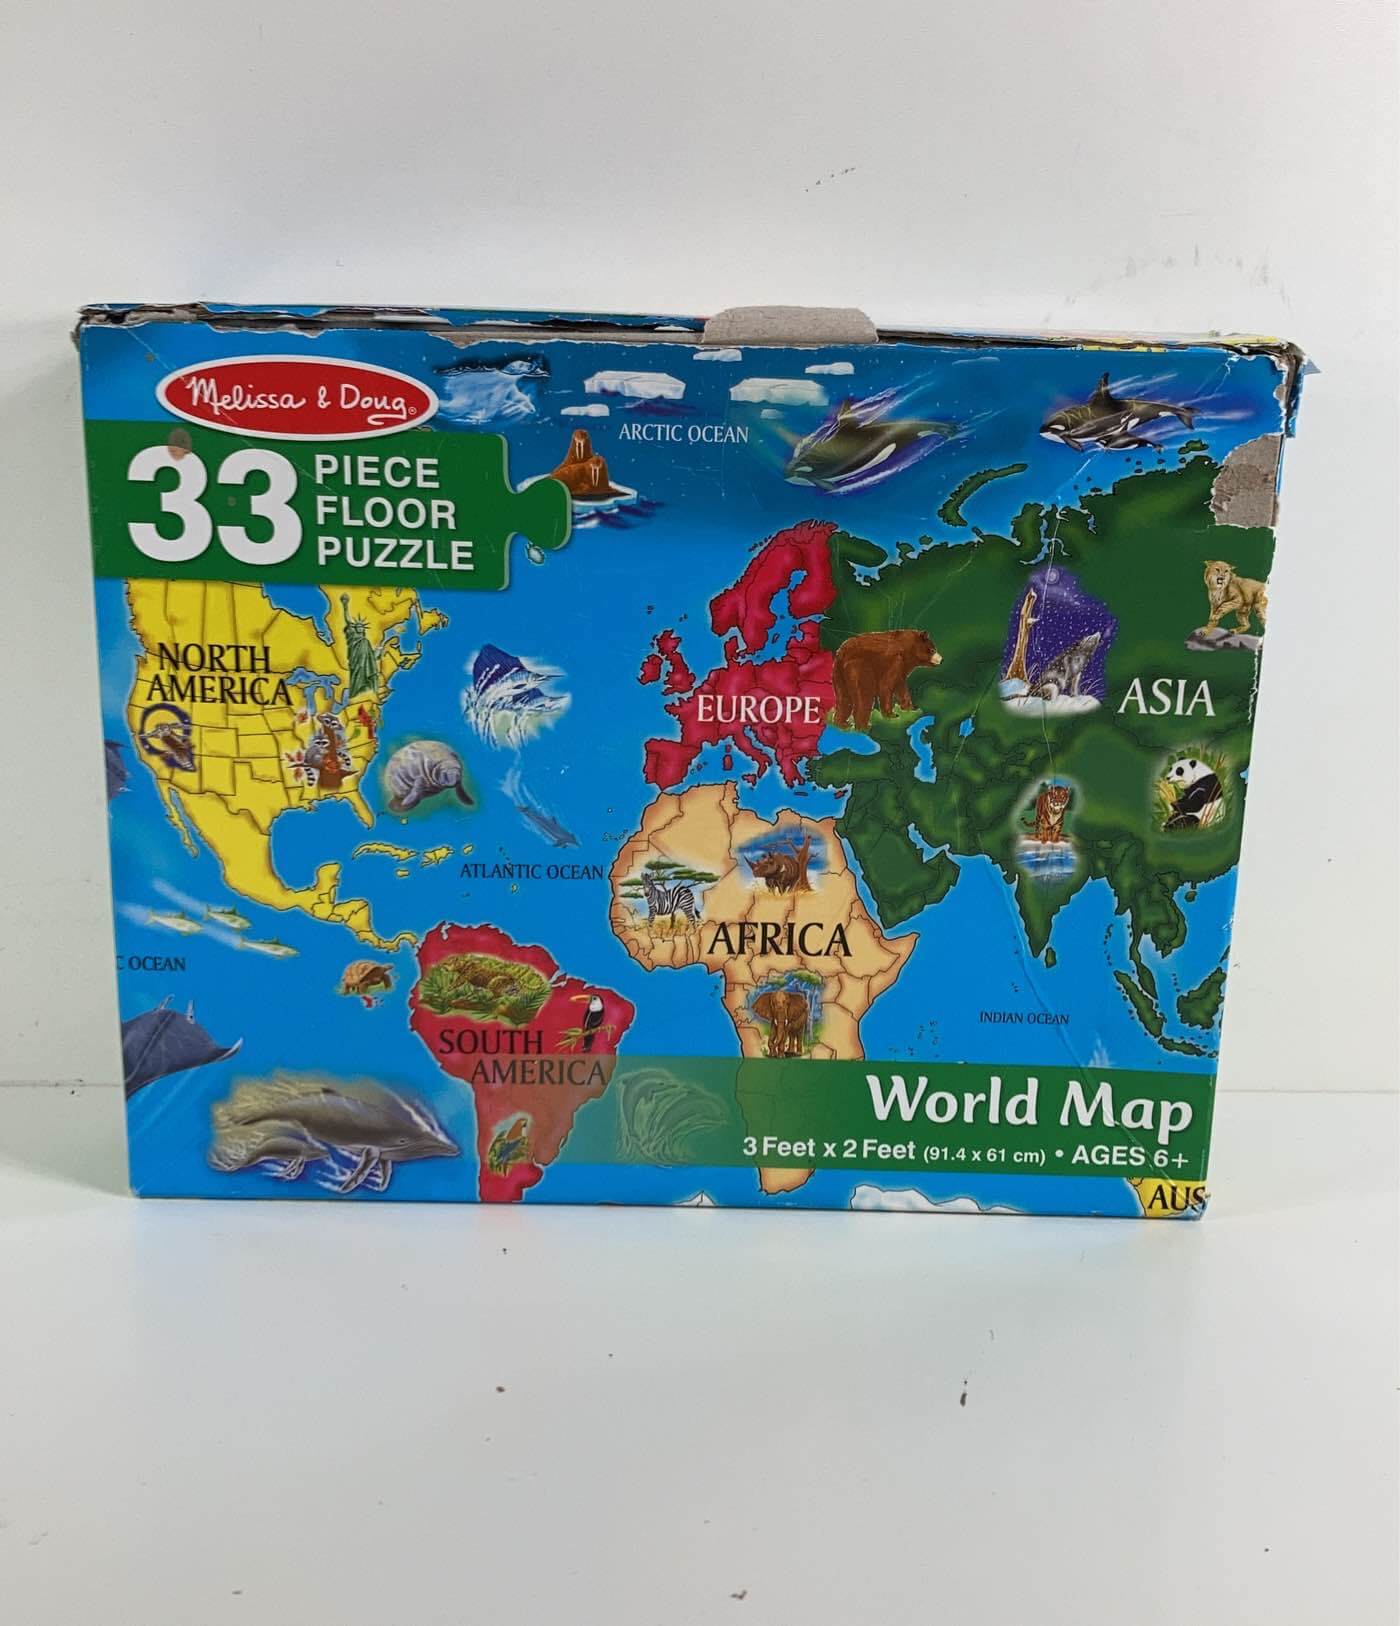  Melissa & Doug Floor Puzzle, World Map